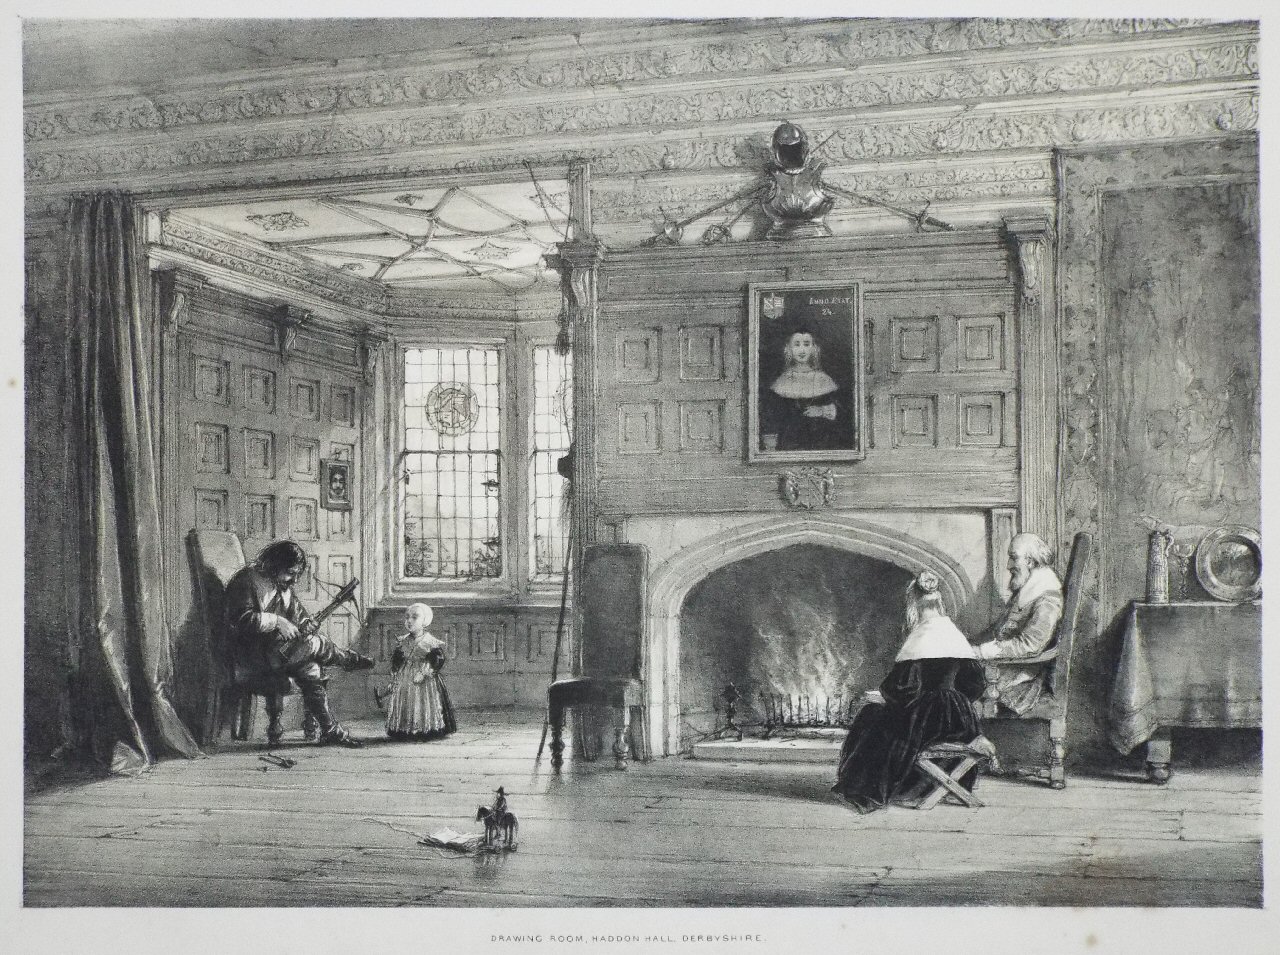 Lithograph - Drawing Room, Haddon Hall, Derbyshire - Nash